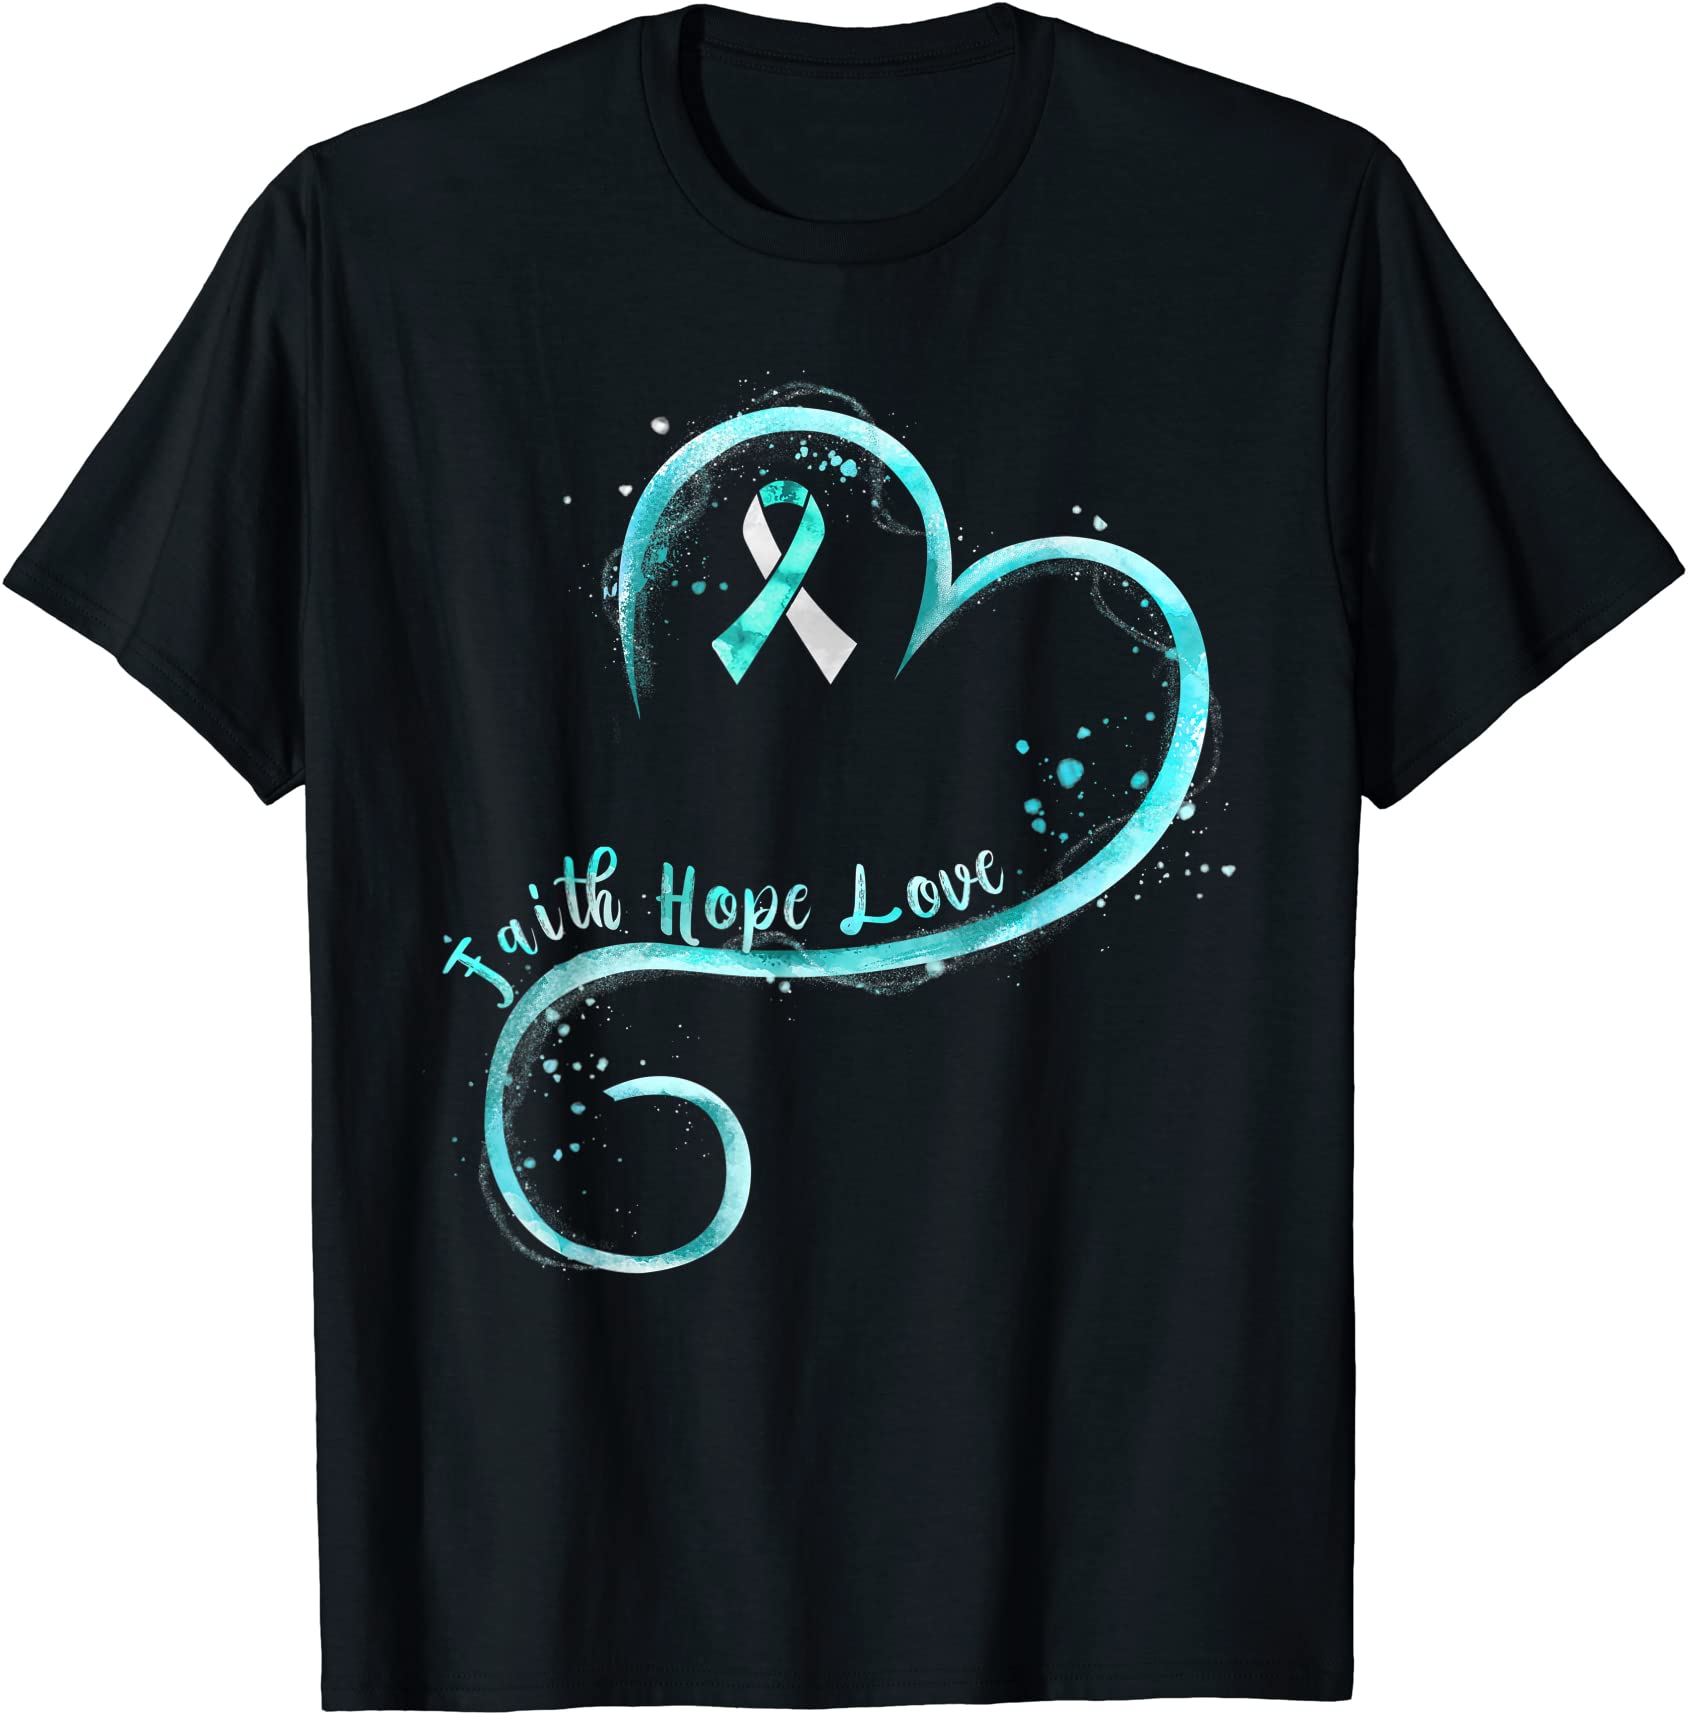 faith hope love teal ribbon cervical cancer awareness t shirt men - Buy ...